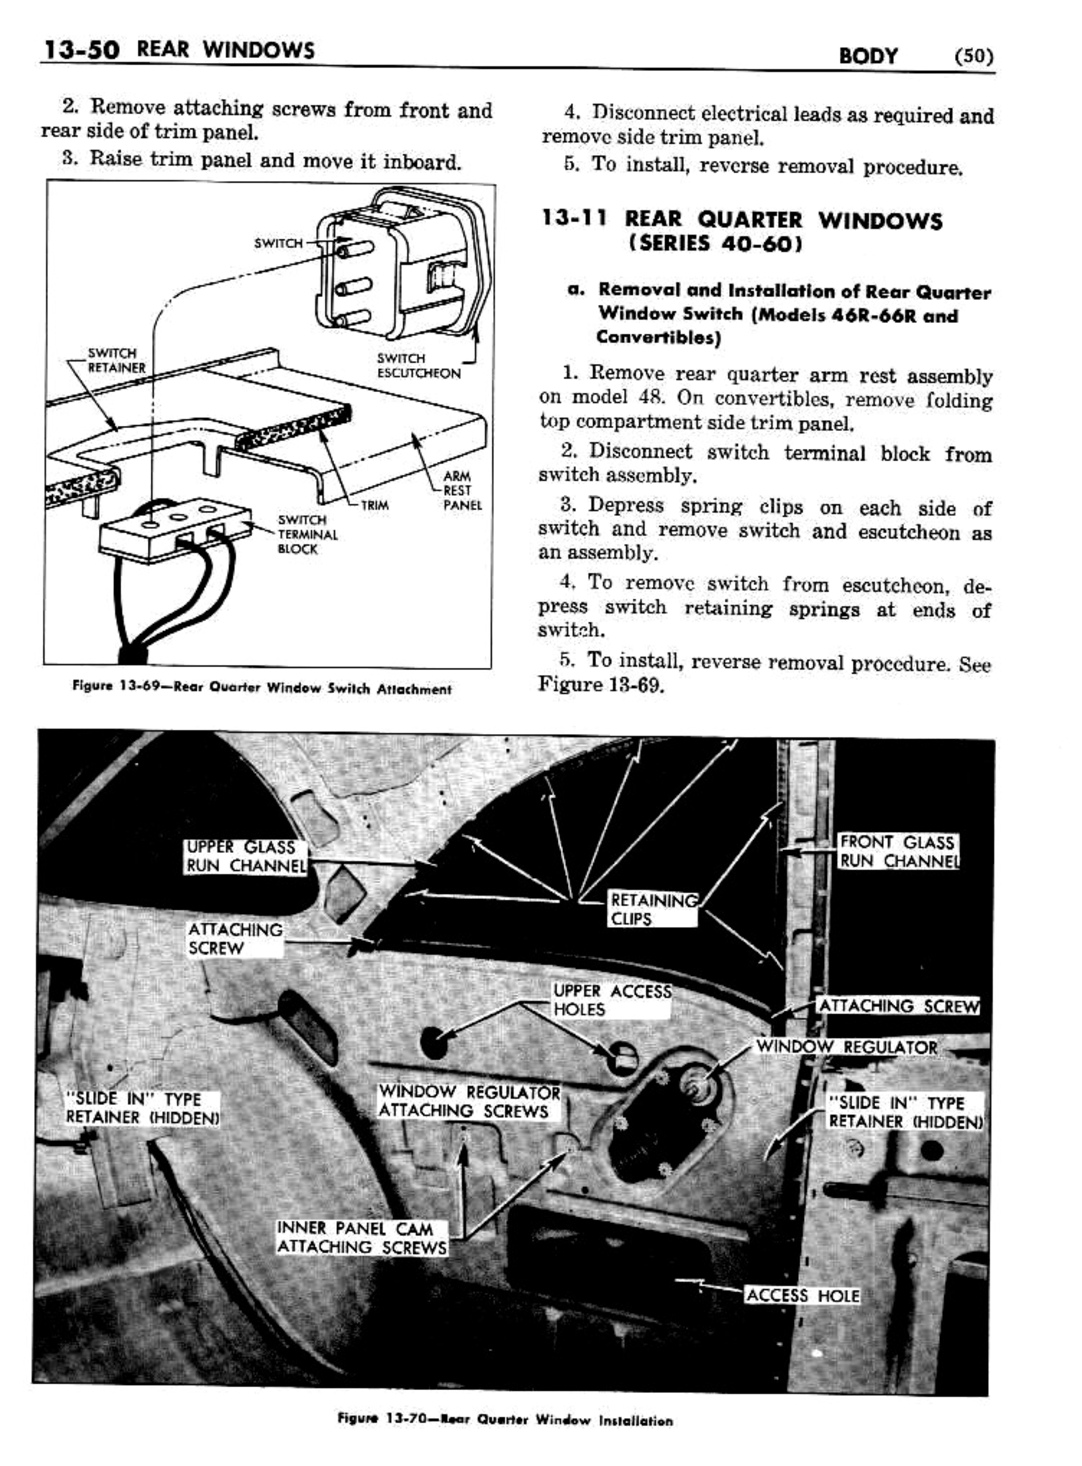 n_1958 Buick Body Service Manual-051-051.jpg